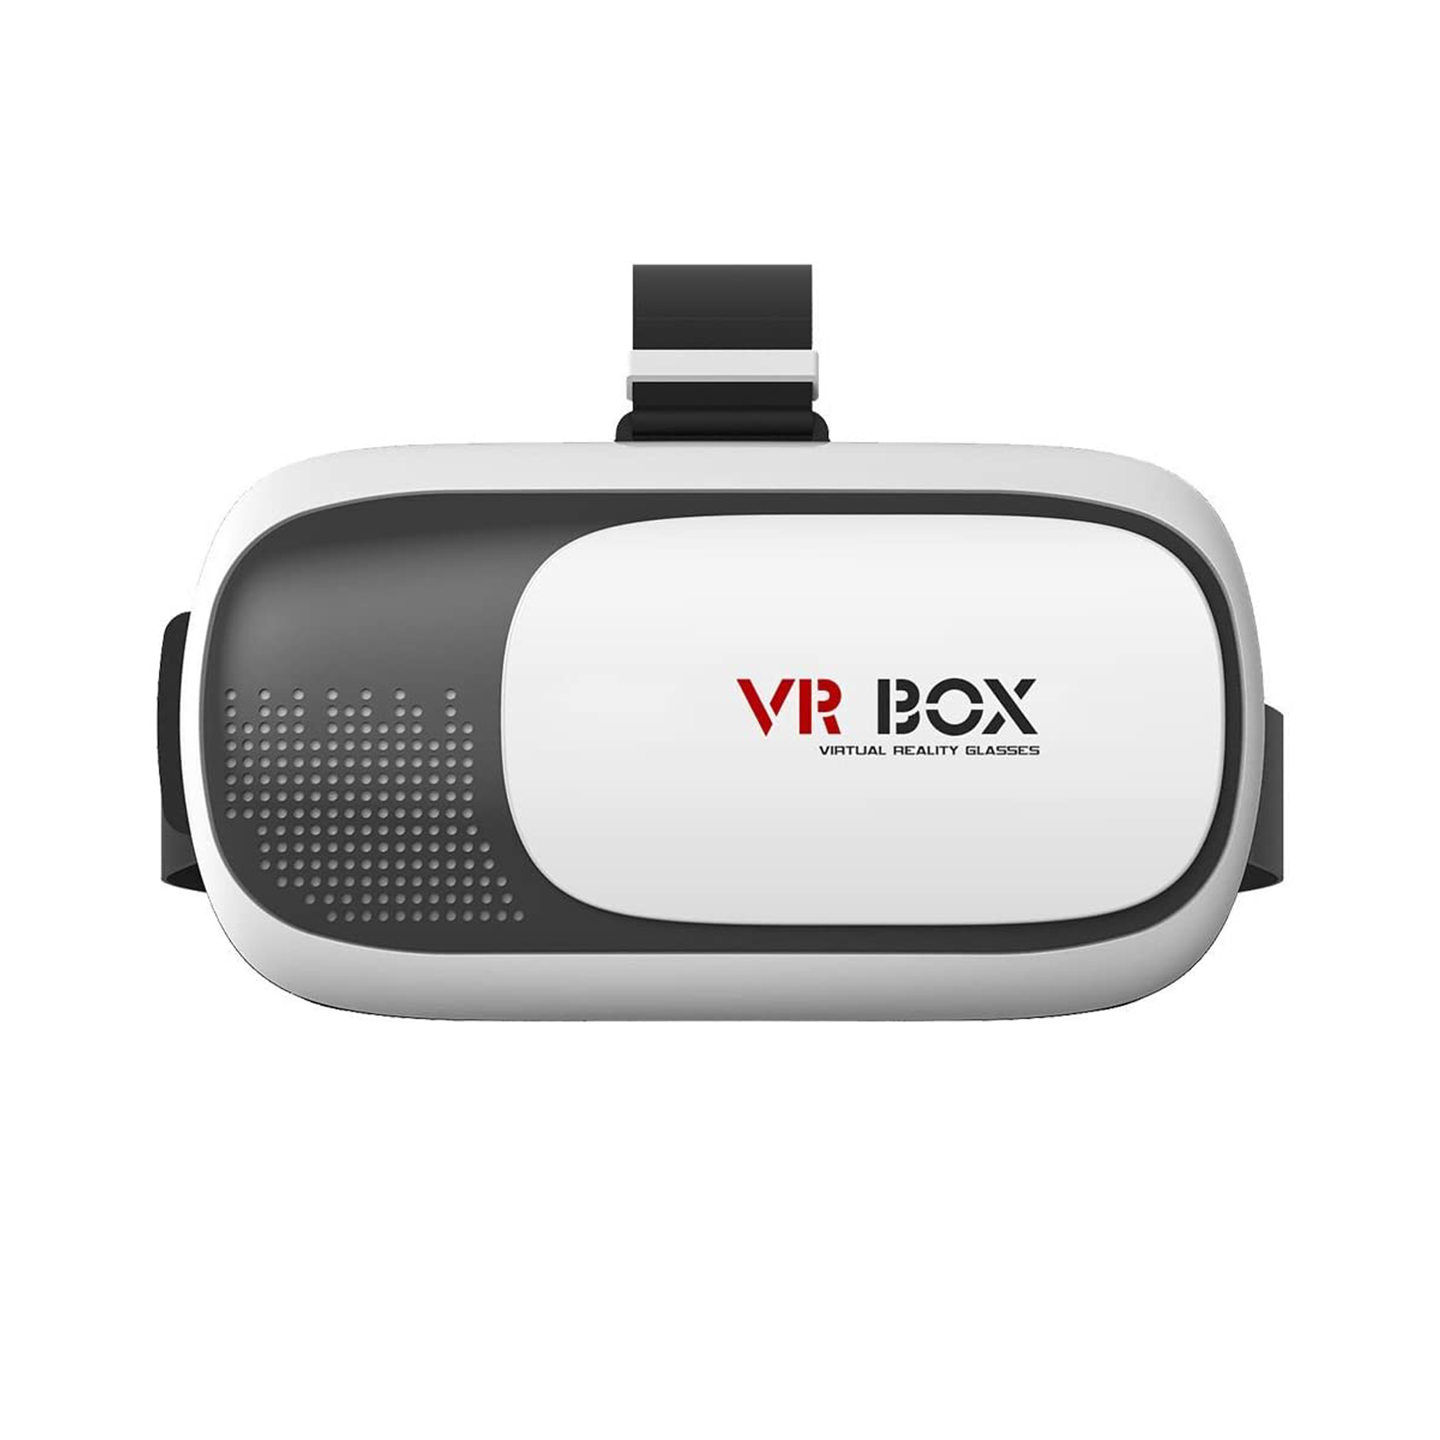 Eslovenia mucho Ardiente VR Box BT Virtual Reality Glasses – Computer Plus